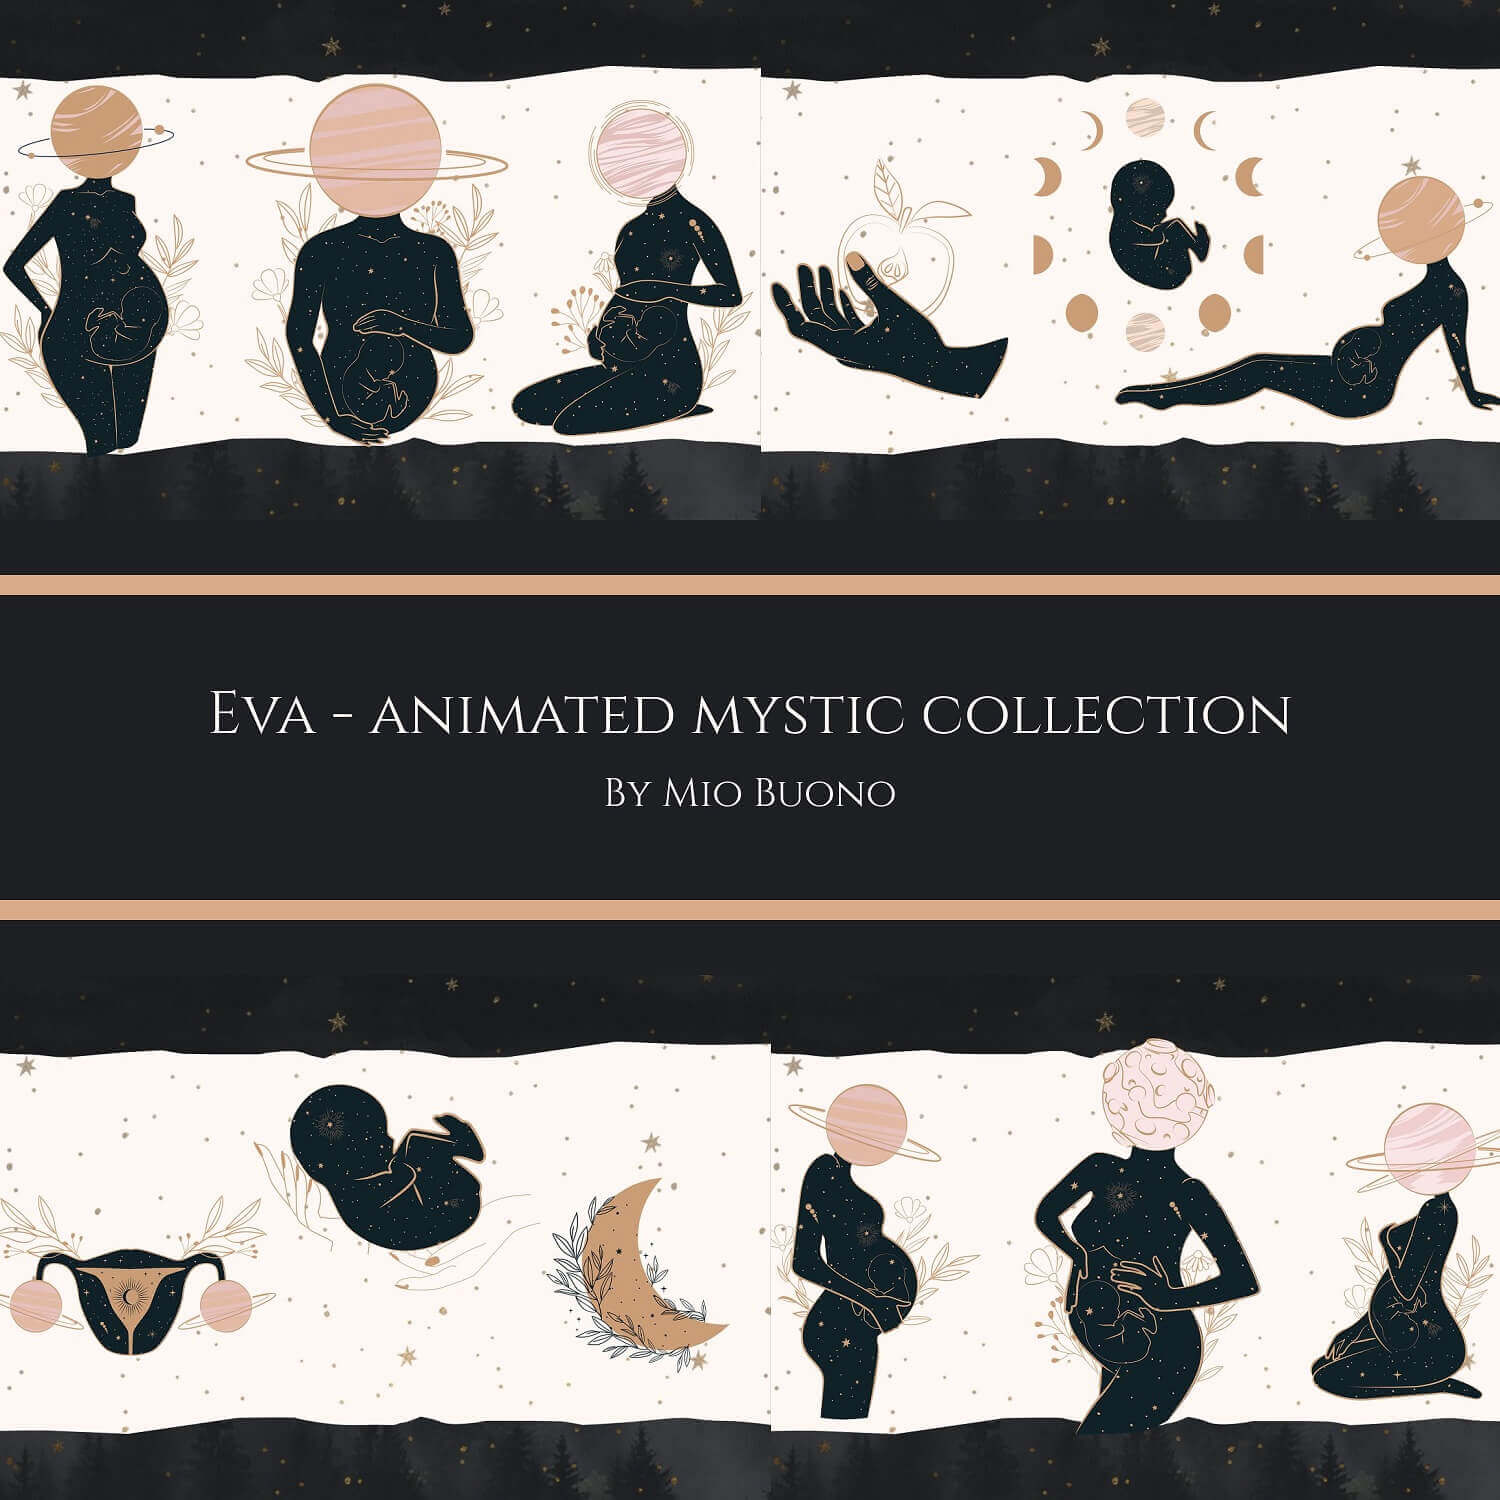 Eva - Animated Mystic Collection.